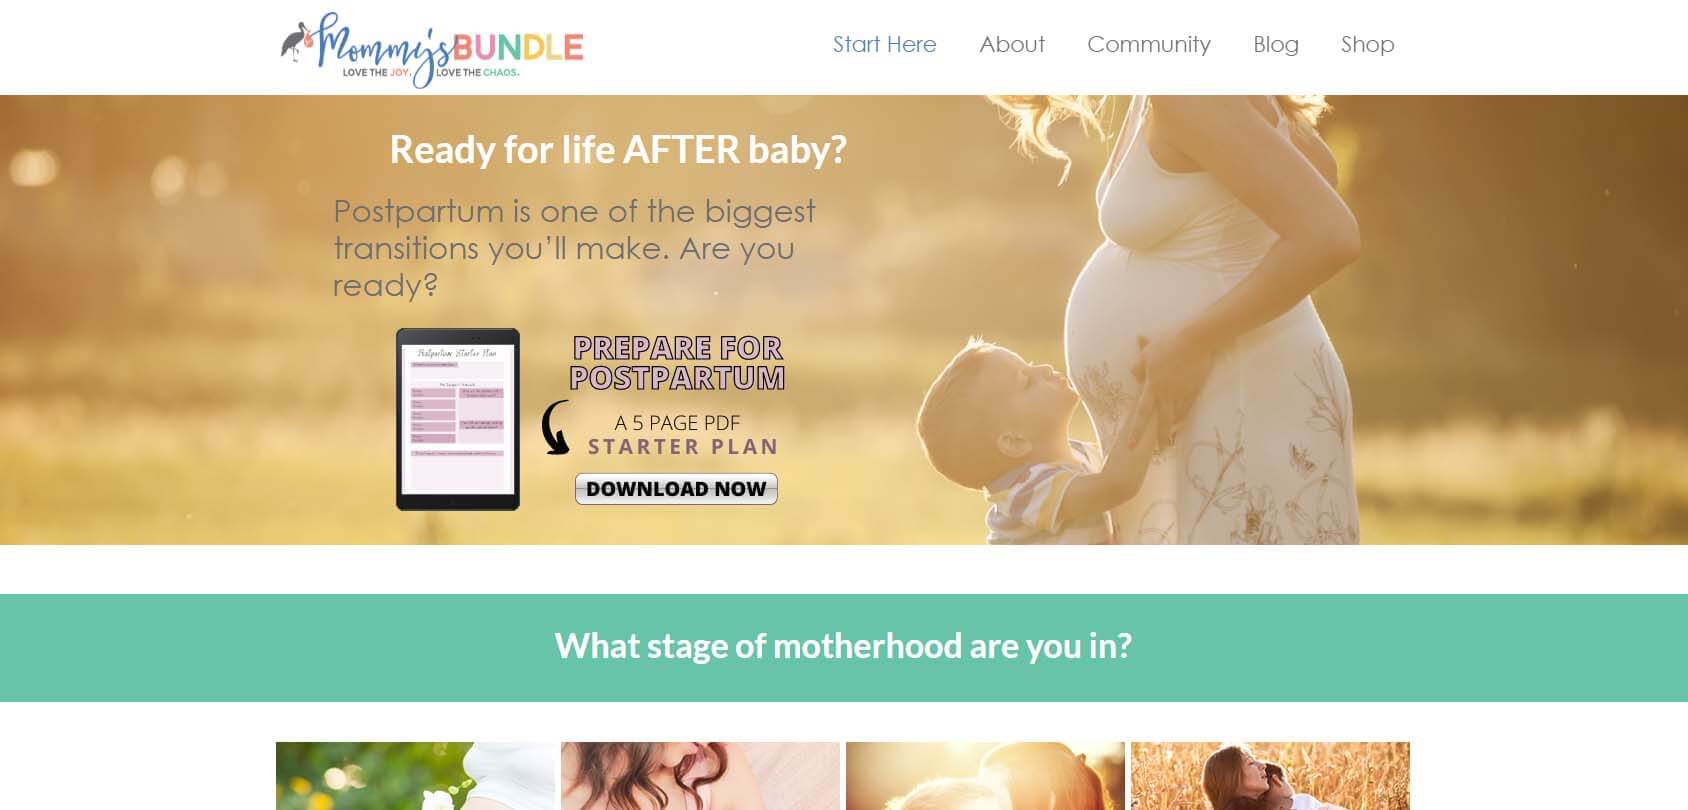 Mommy’s Bundle Homepage